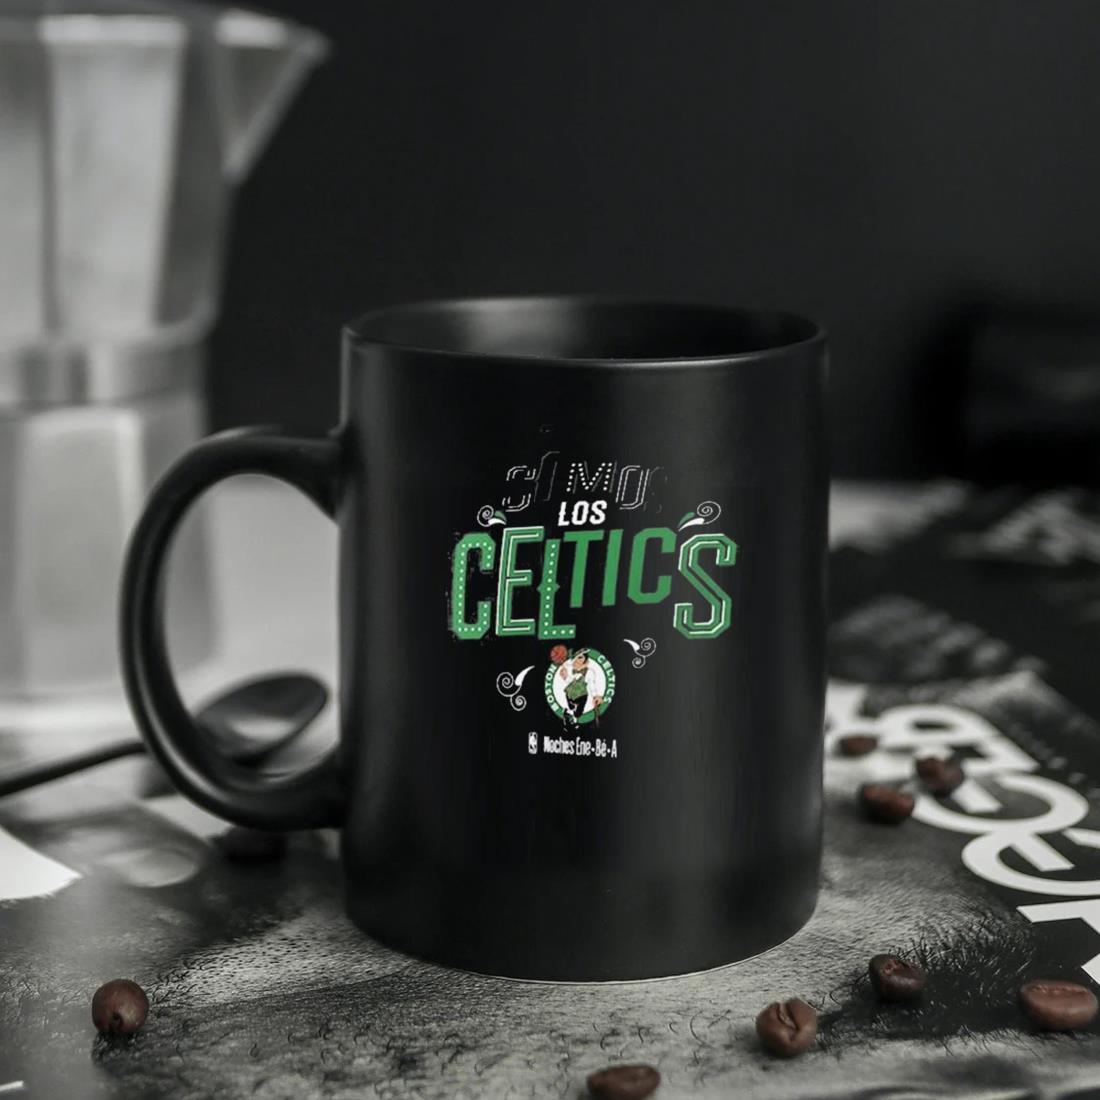 Somos Los Boston Celtics Noches Ene-be-a Mug ten